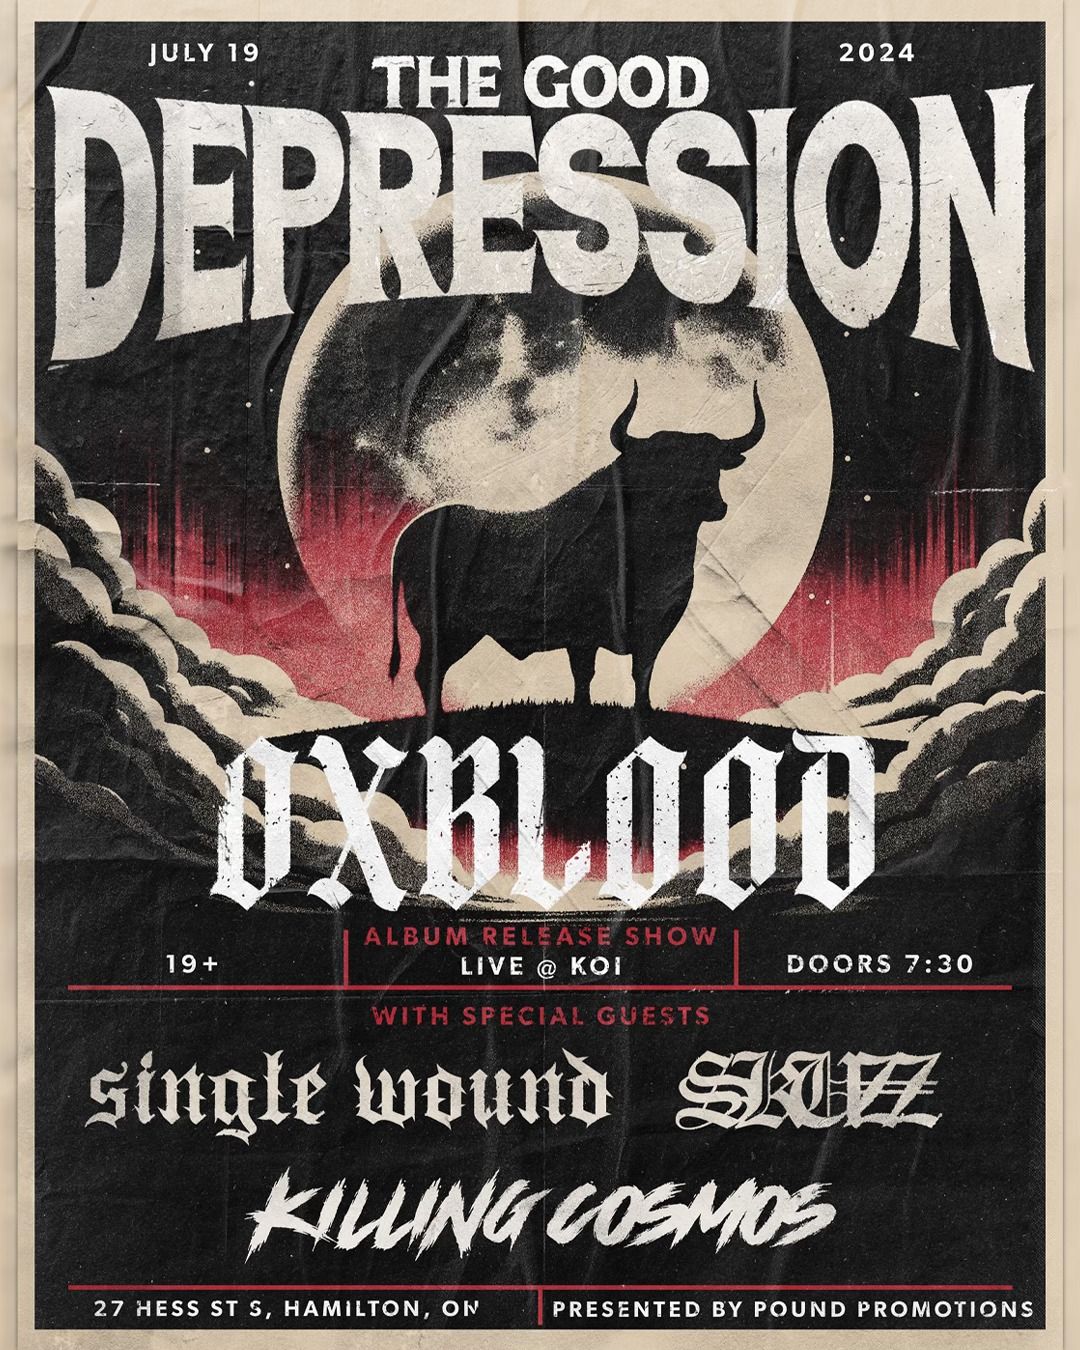 The Good Depression album release w\/ Single Wound, SKUZZ, Killing Cosmos